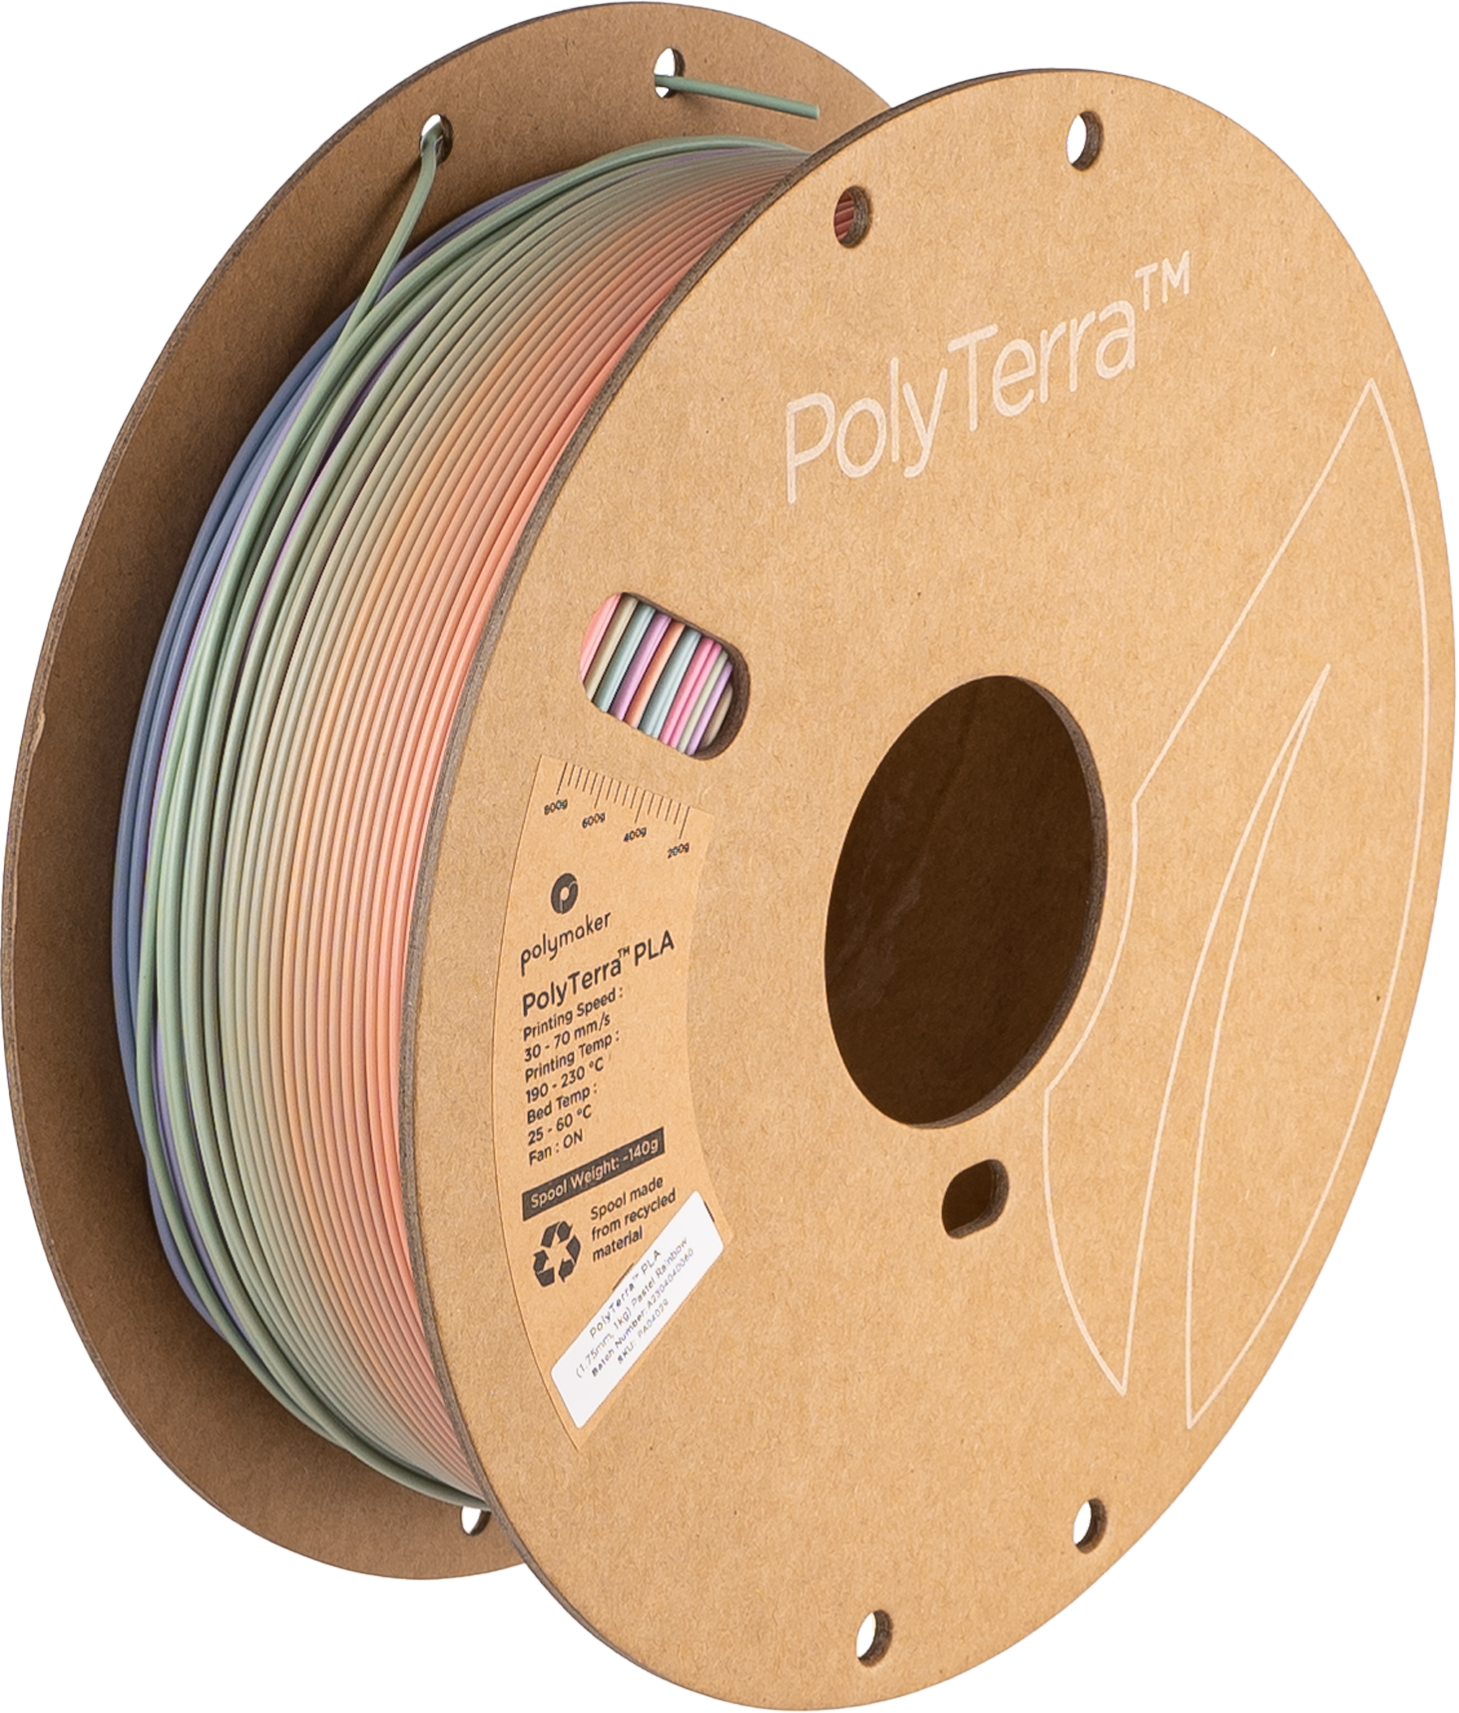 Polymaker PolyTerra PLA Matte Filament 1.75mm 1kg